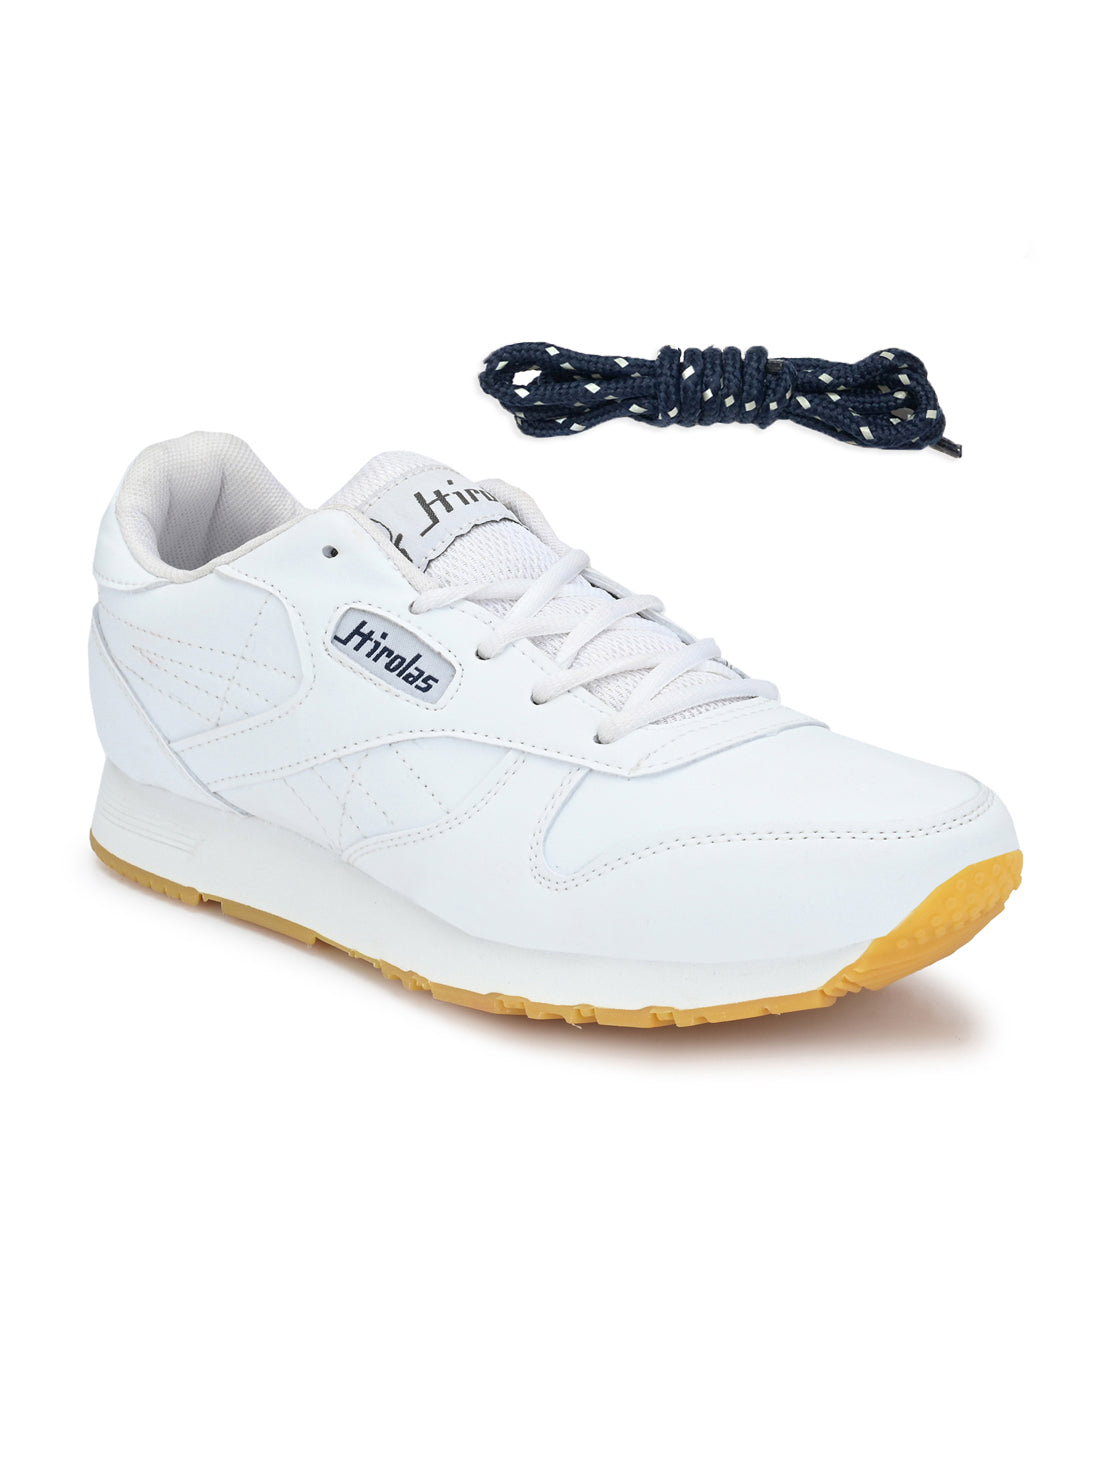 Hirolas® Men's Multisports Shock Absorbing Walking Running Fitness Athletic Training Gym White Lace Up Sneaker Sport Shoes (HRL2001WHN)